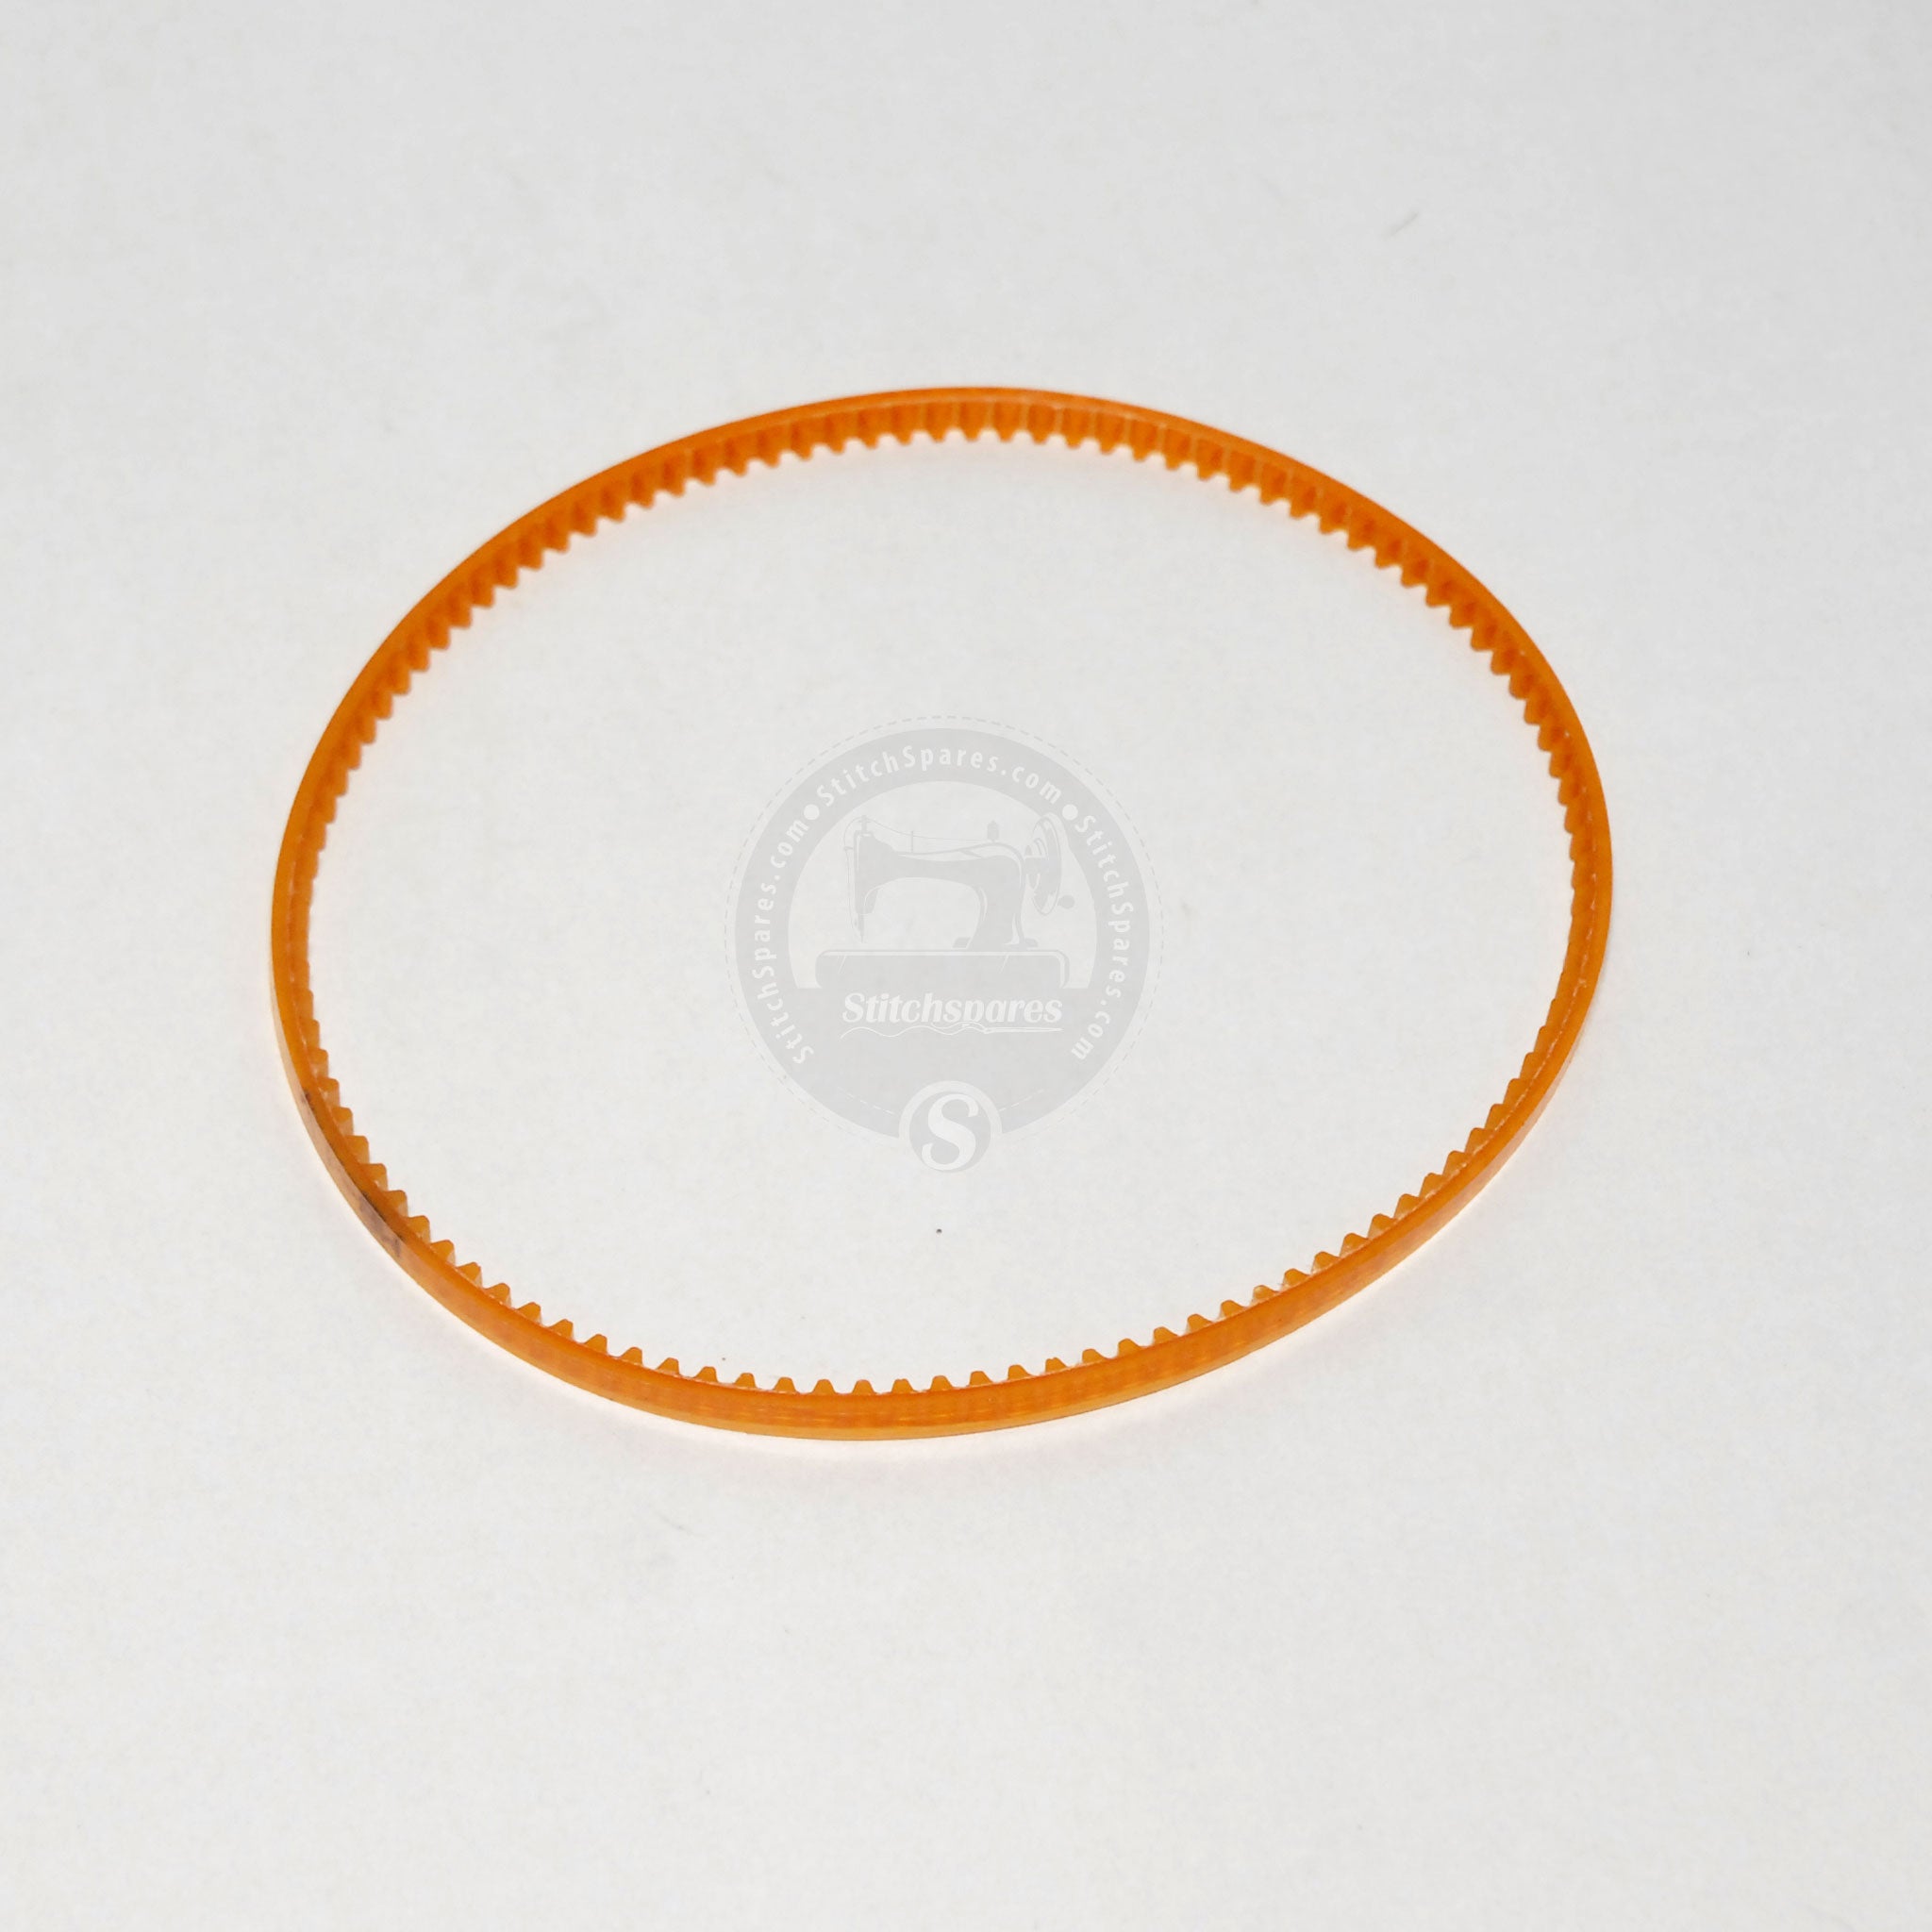 141636001 Flat Head Lock Eye Machine Plastic Oil Carrying Gear Belt für Brother LH4-B814 HM-818A Knopfloch-Nähmaschine